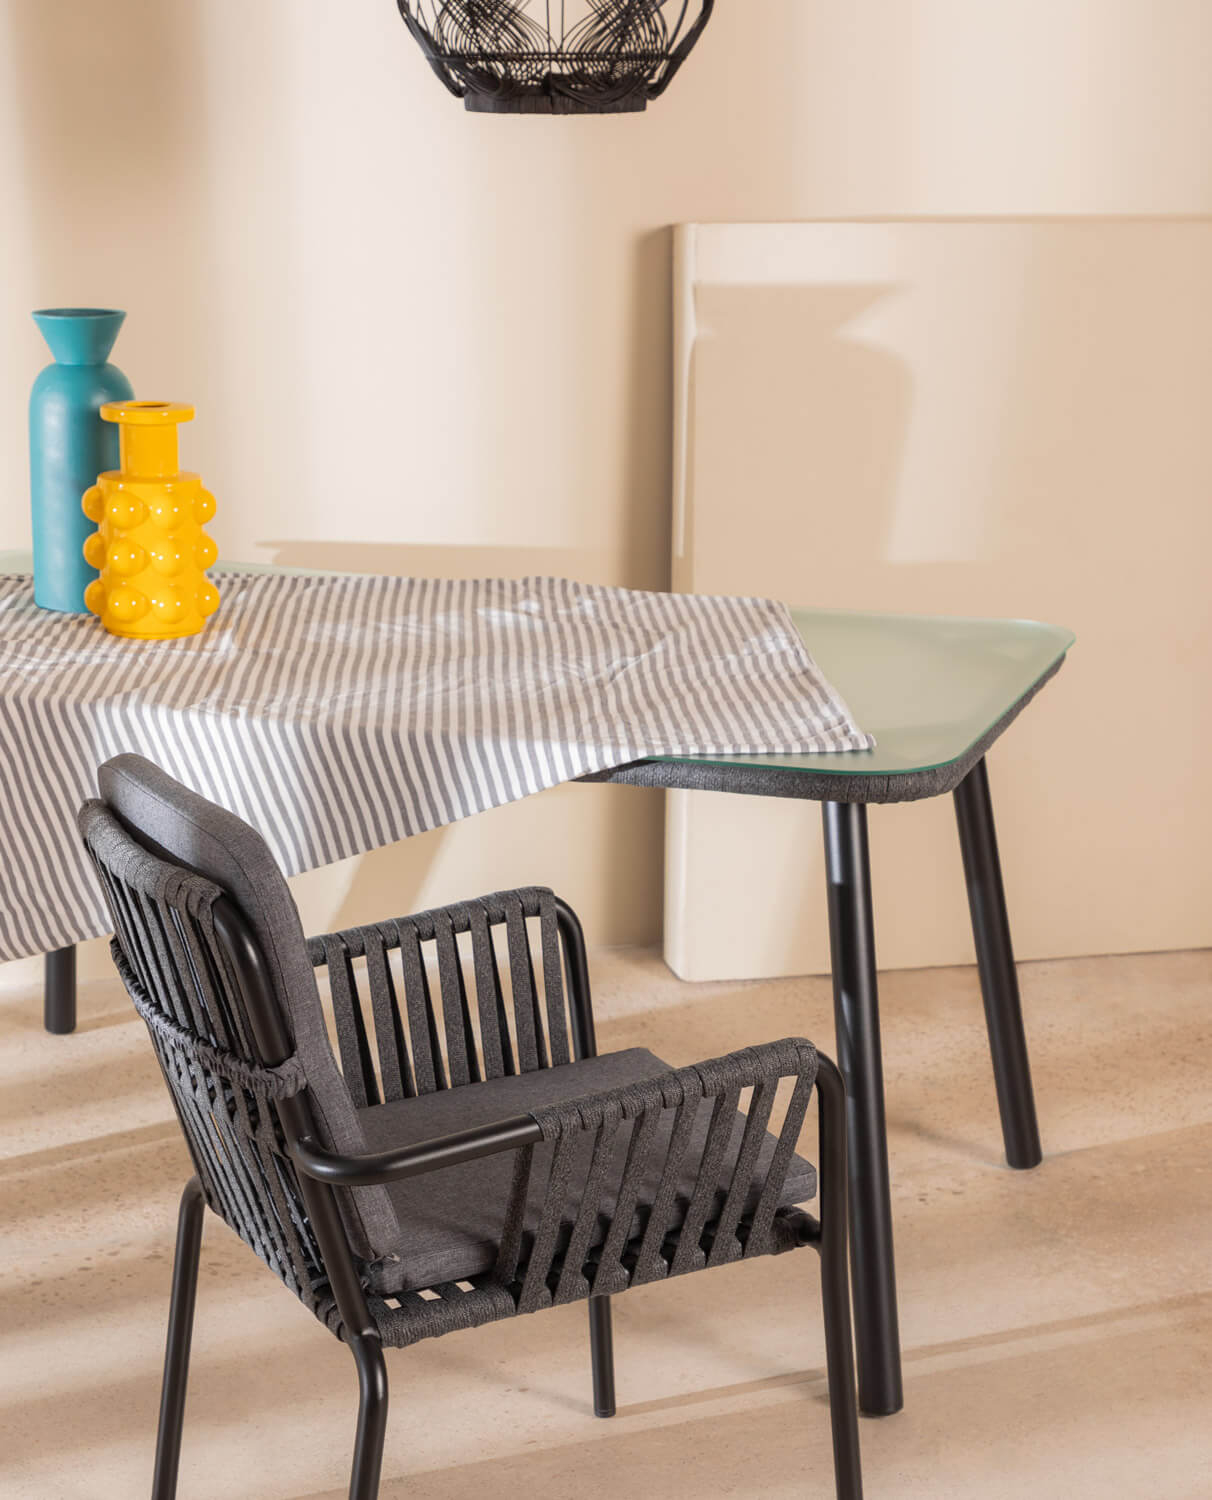 Rectangular Aluminium and Glass Dining Table (160x90 cm) Drian, gallery image 2